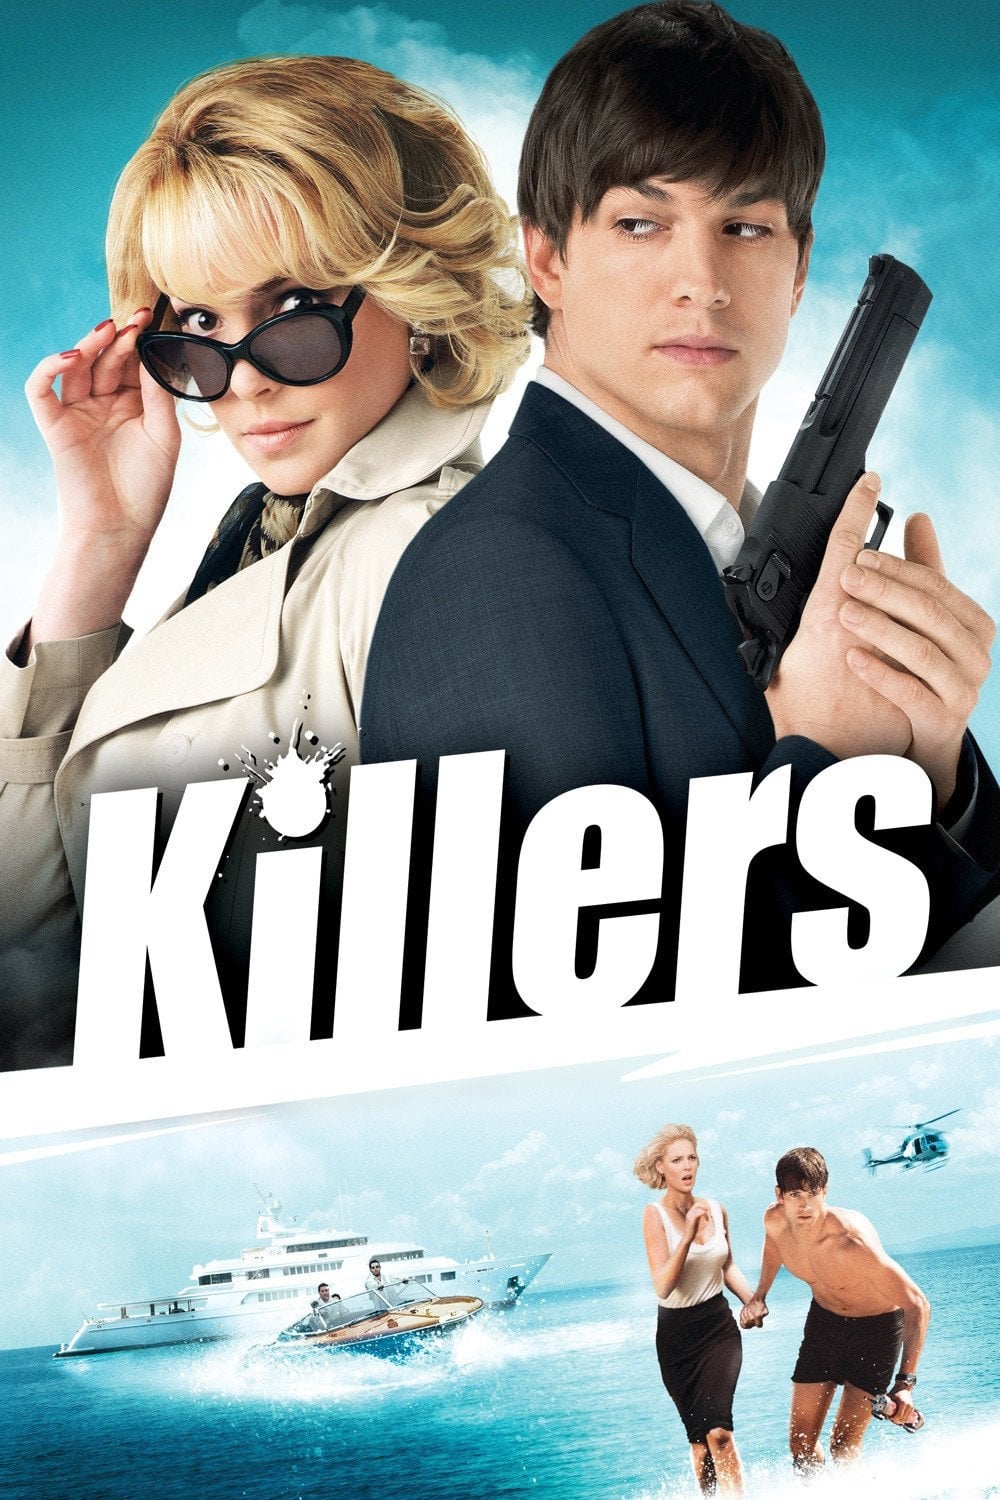 Killers [HD] (2010)